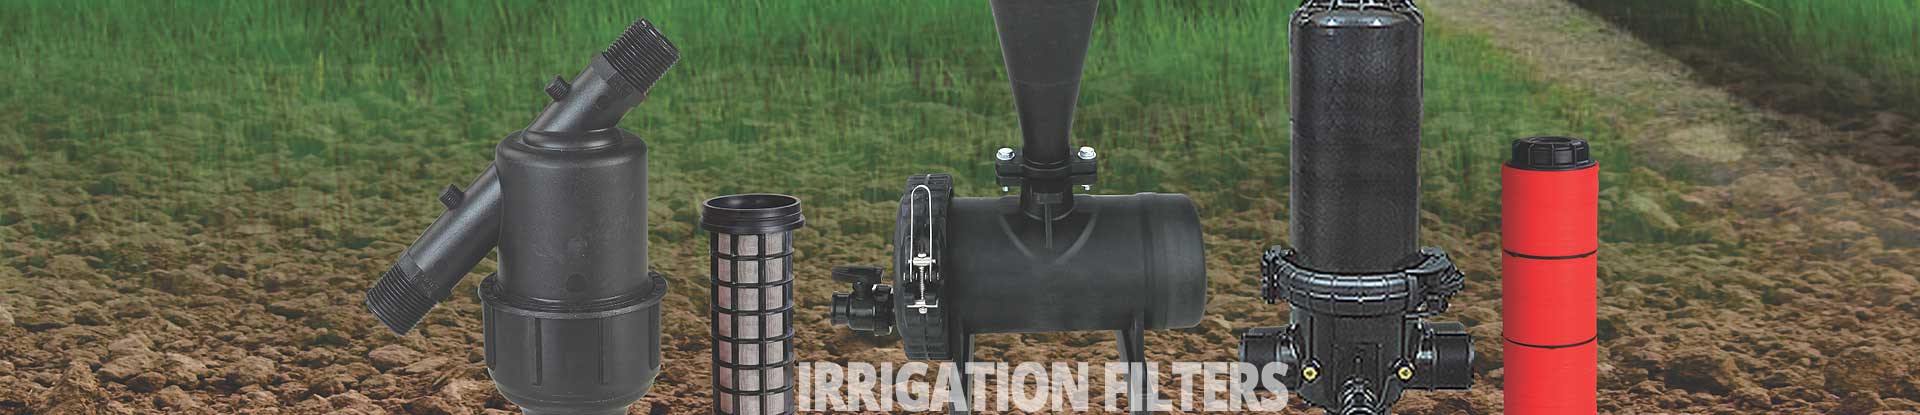 Irrigation Filters | Captain Polyplast Ltd.